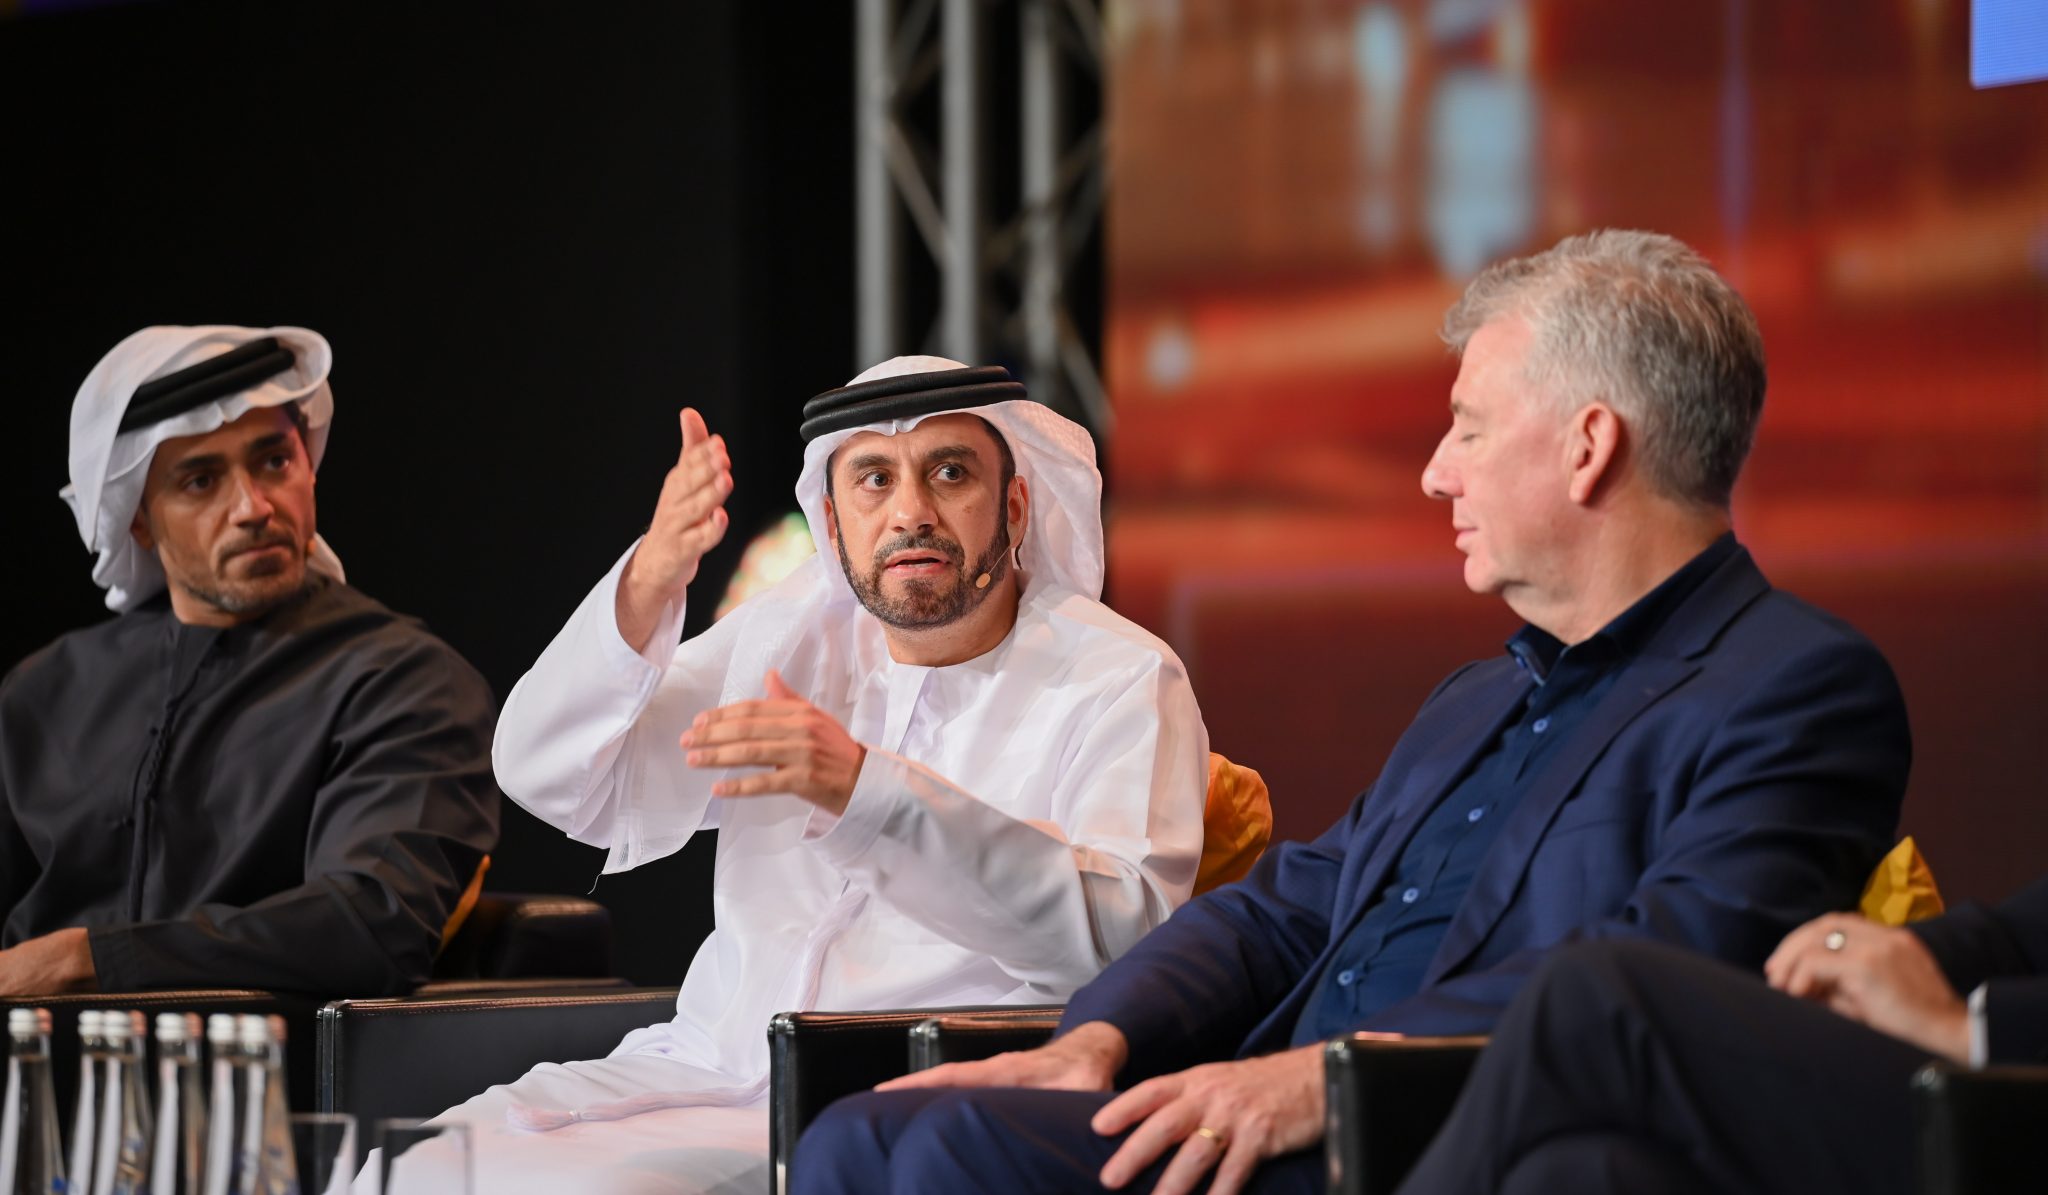 From left: Issam Kazim, Dubai Corporation for Tourism; Adnan Kazim, Emirates Airlines; Paul Griffiths, Dubai Airport; Philippe Zuber, Kerzner; and Rafat Ali, Skift.